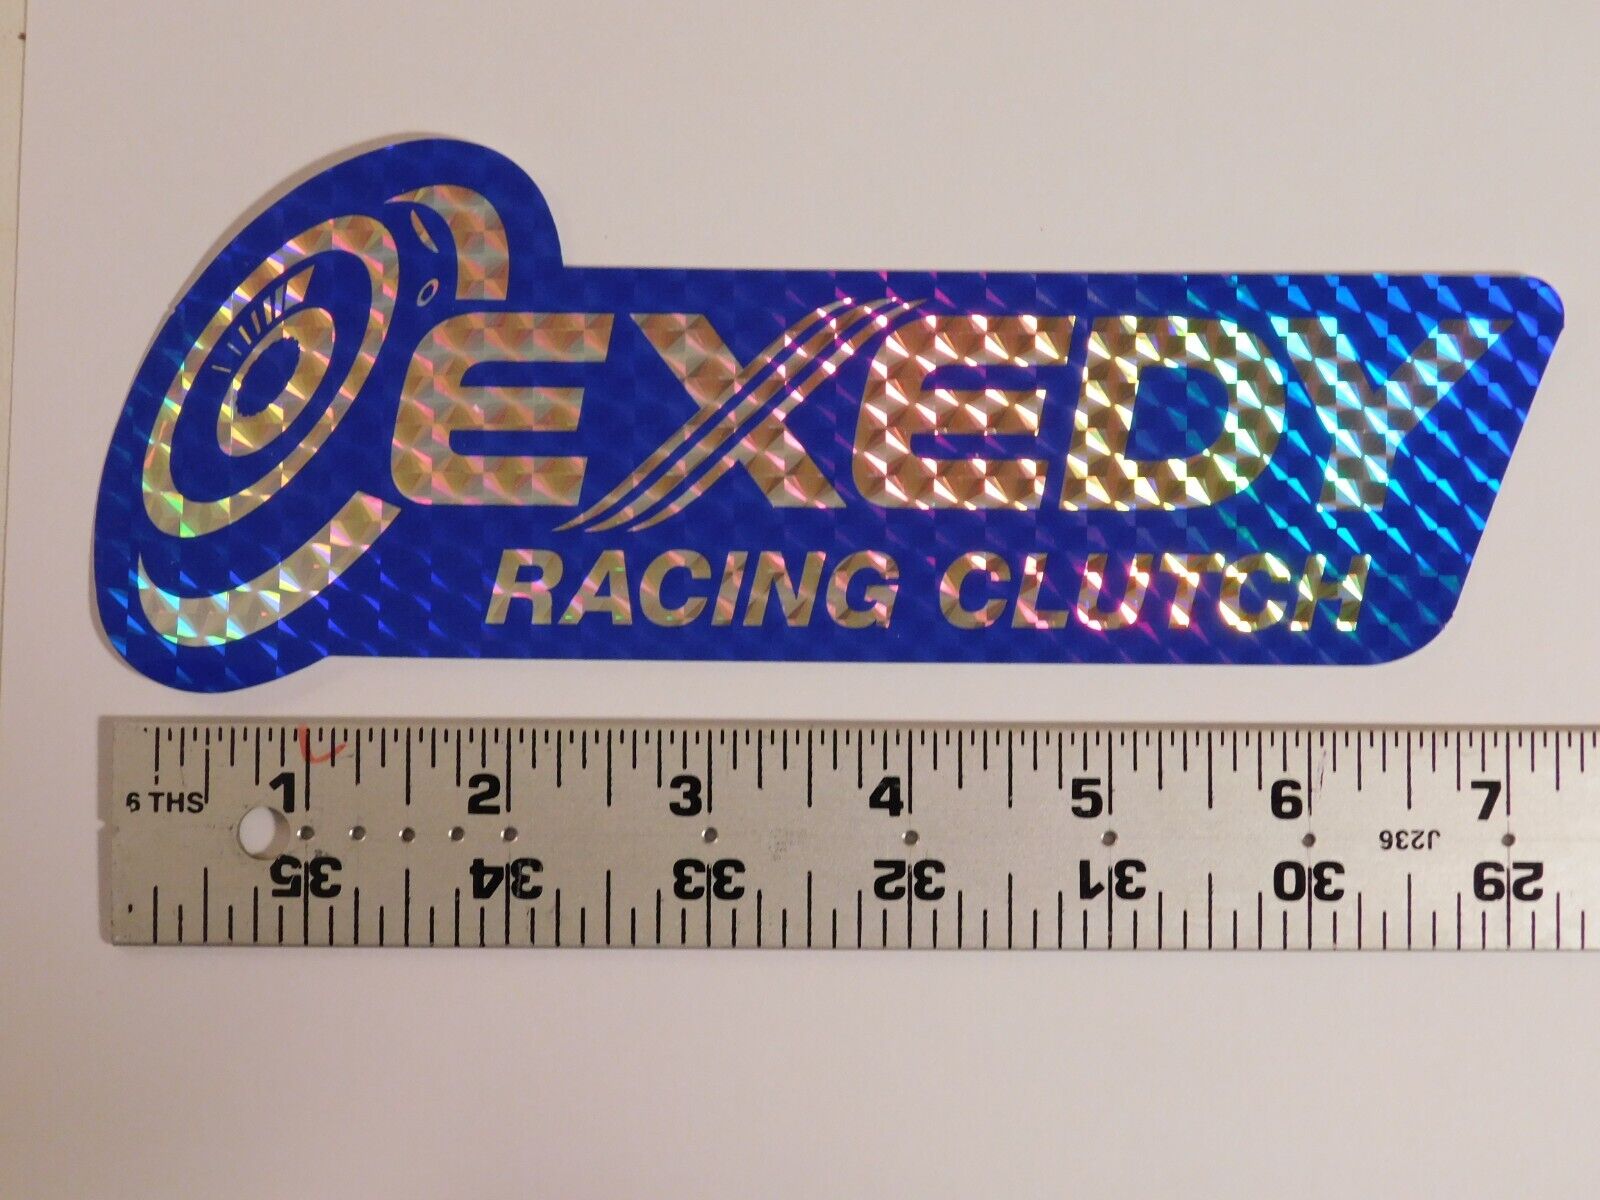 Exedy Racing Clutch Decal Sticker